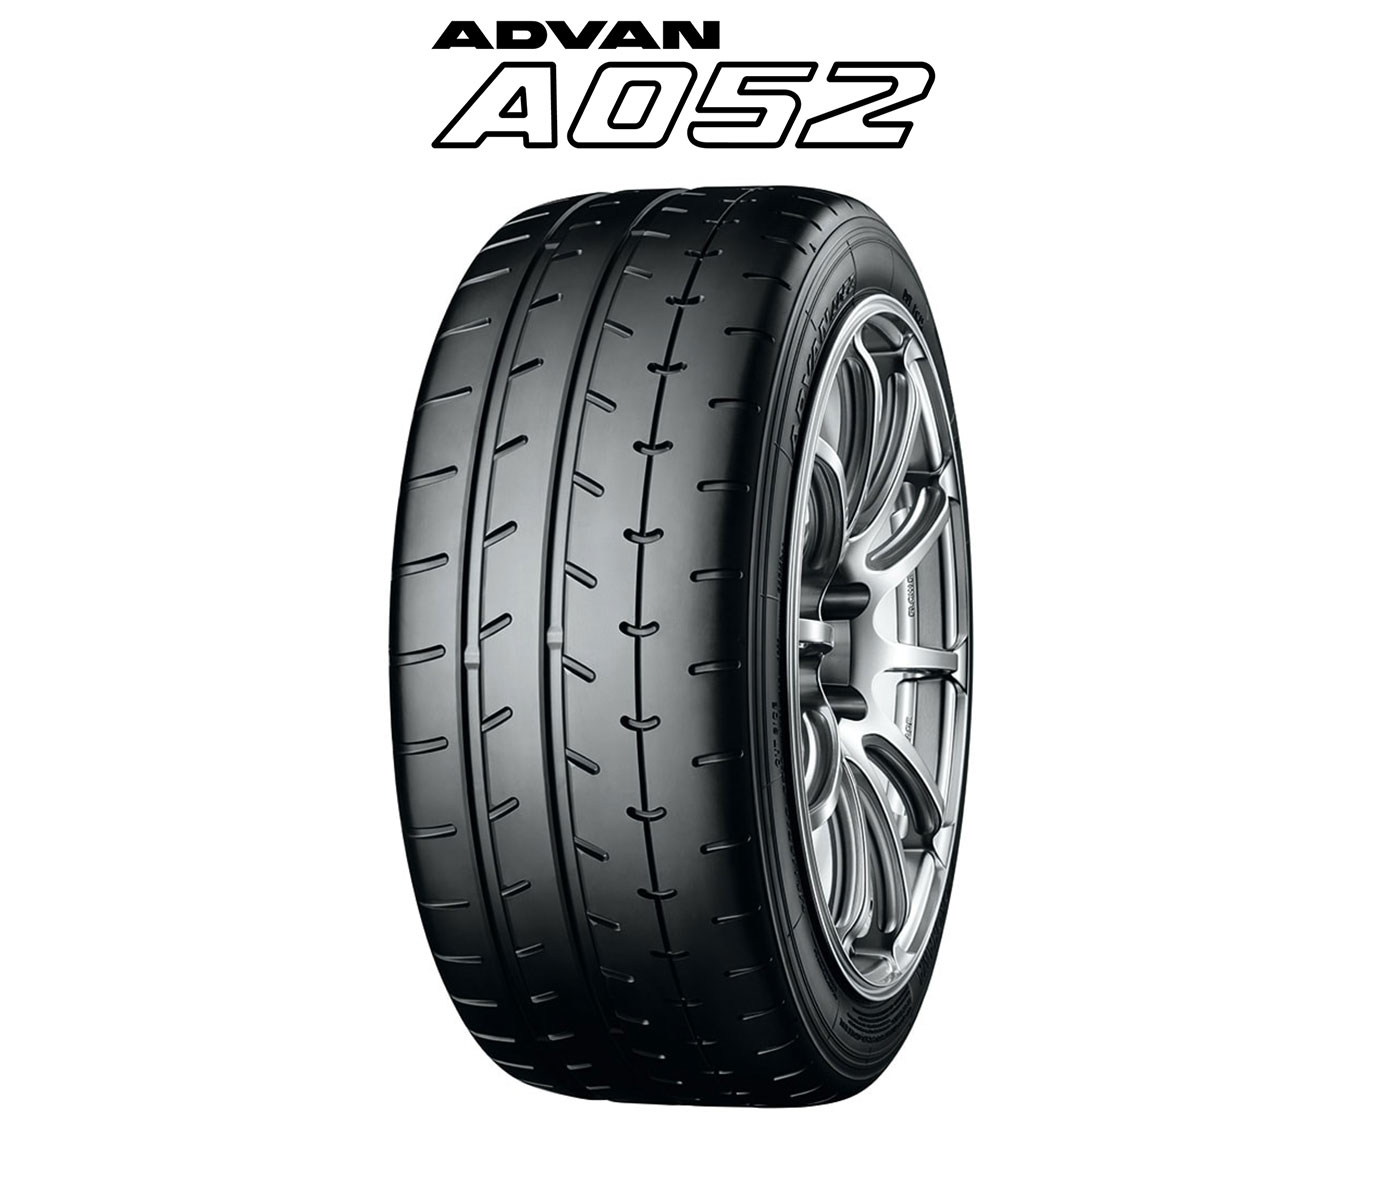 Yokohama ADVAN A052 Quality Racing Tires by Hanshin-Imports